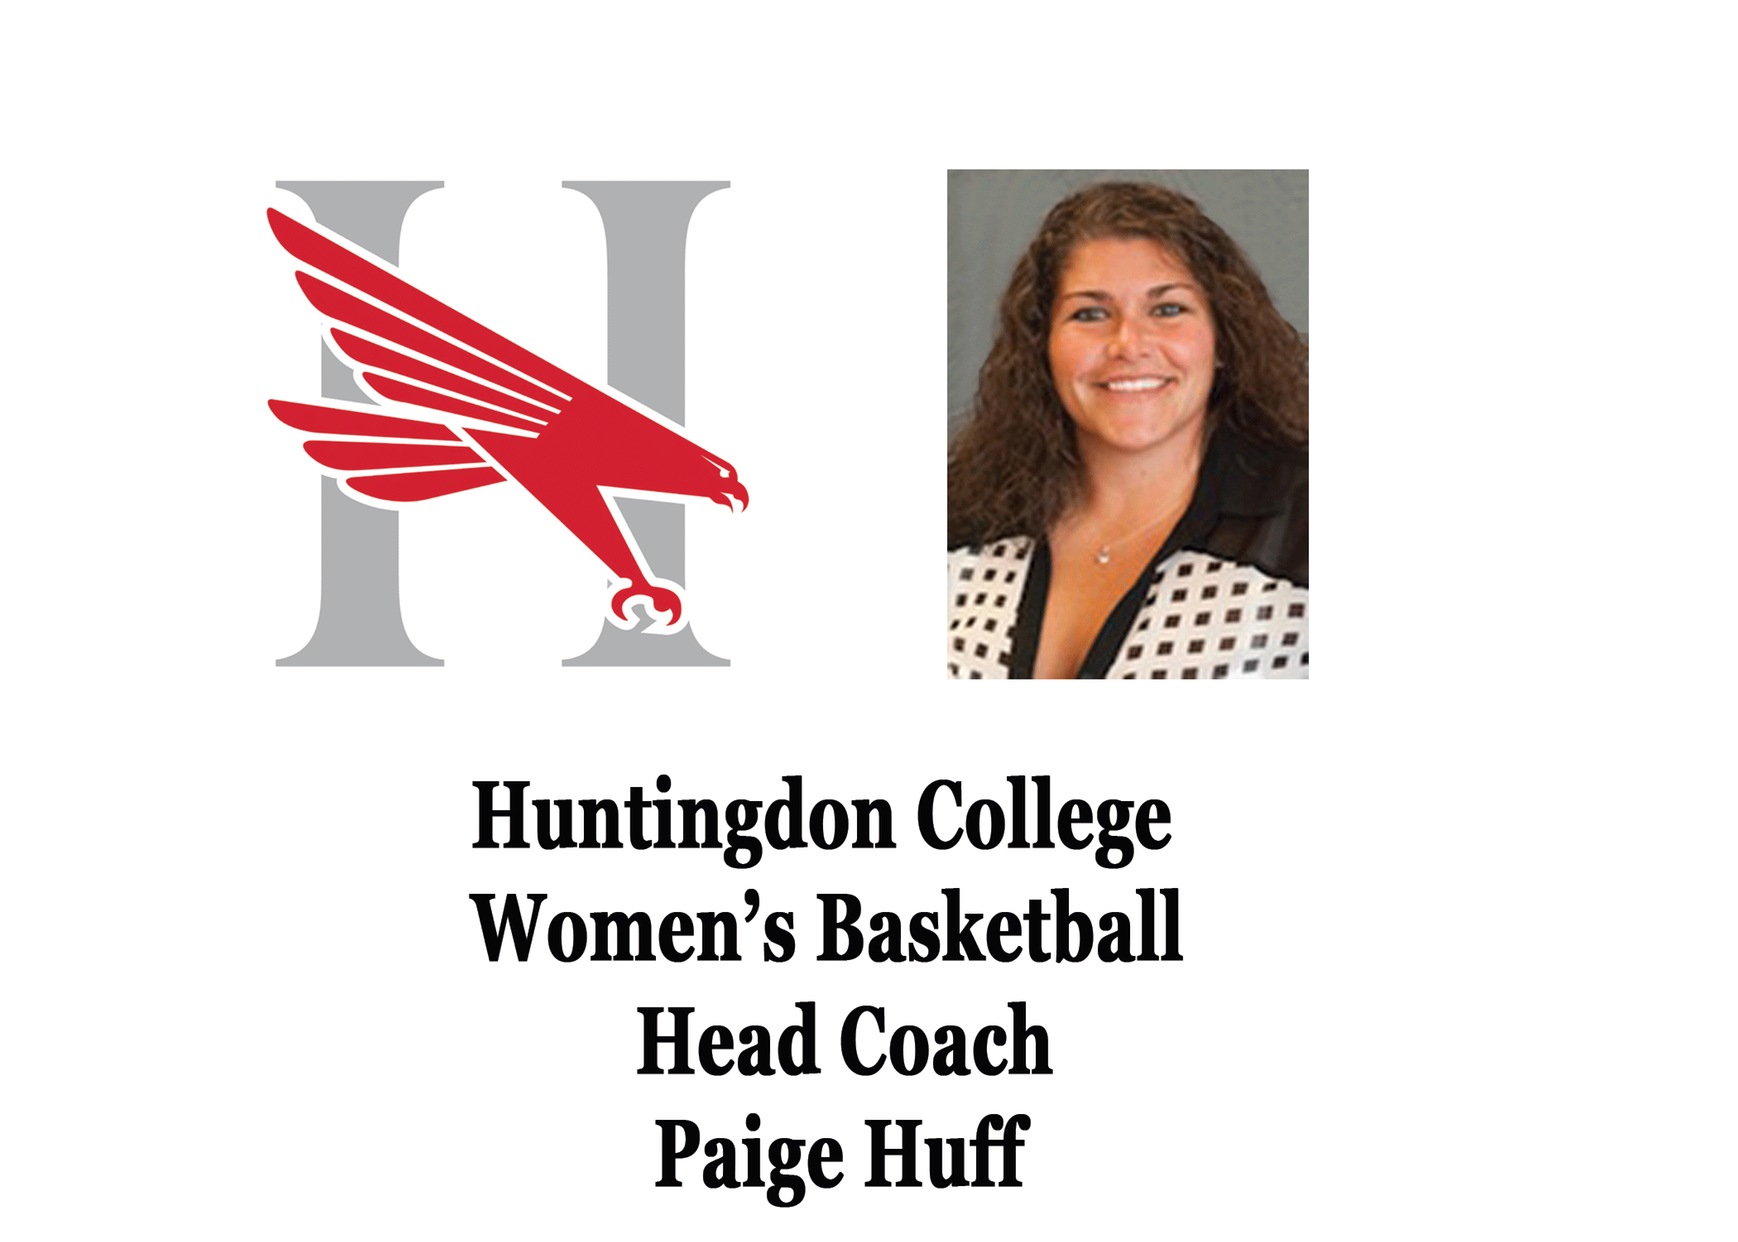 Huff officially named head women’s basketball coach